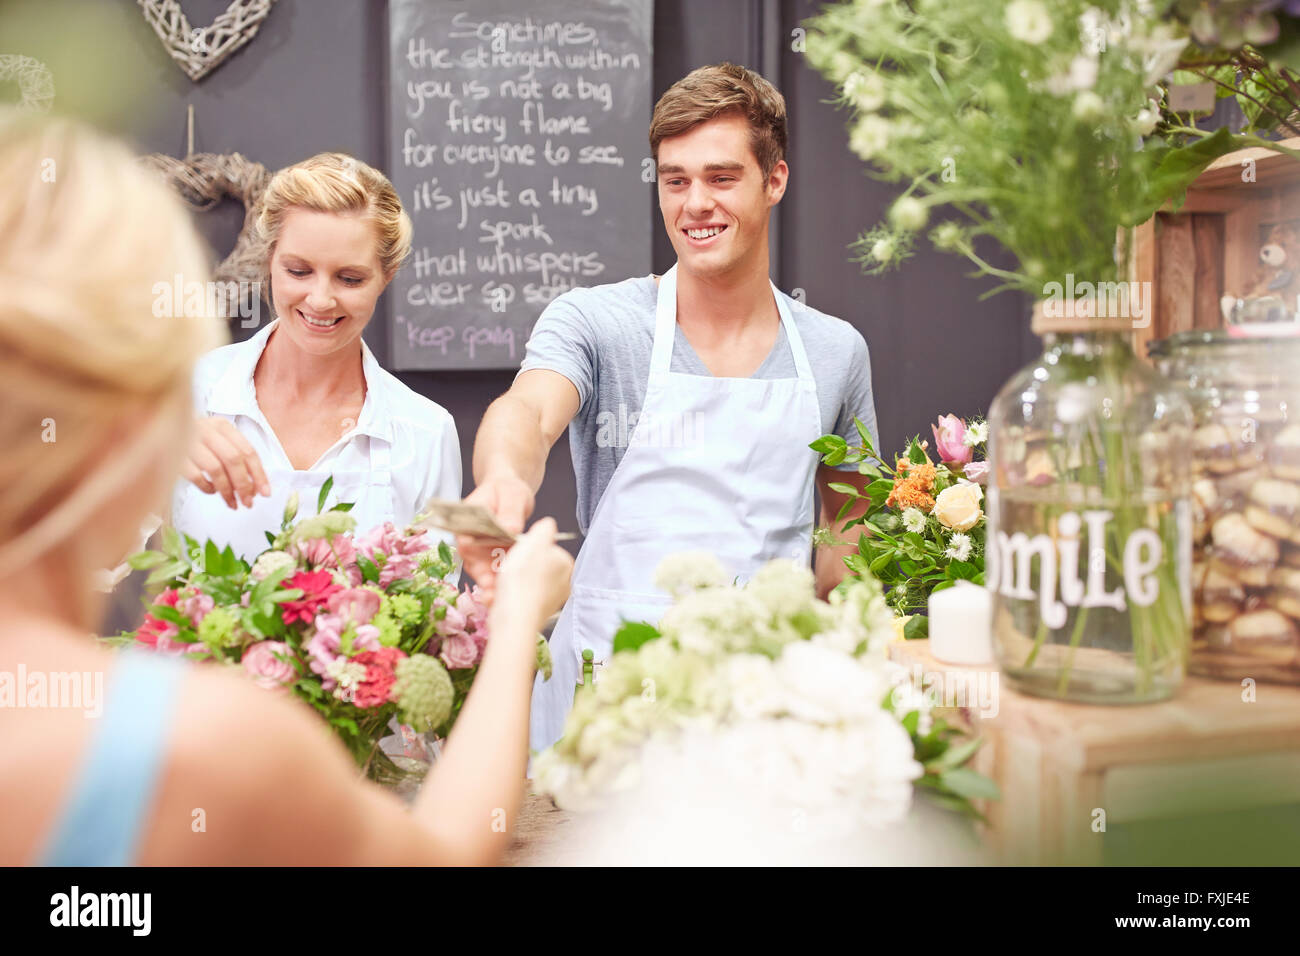 Florist taking money from woman in flower shop Stock Photo